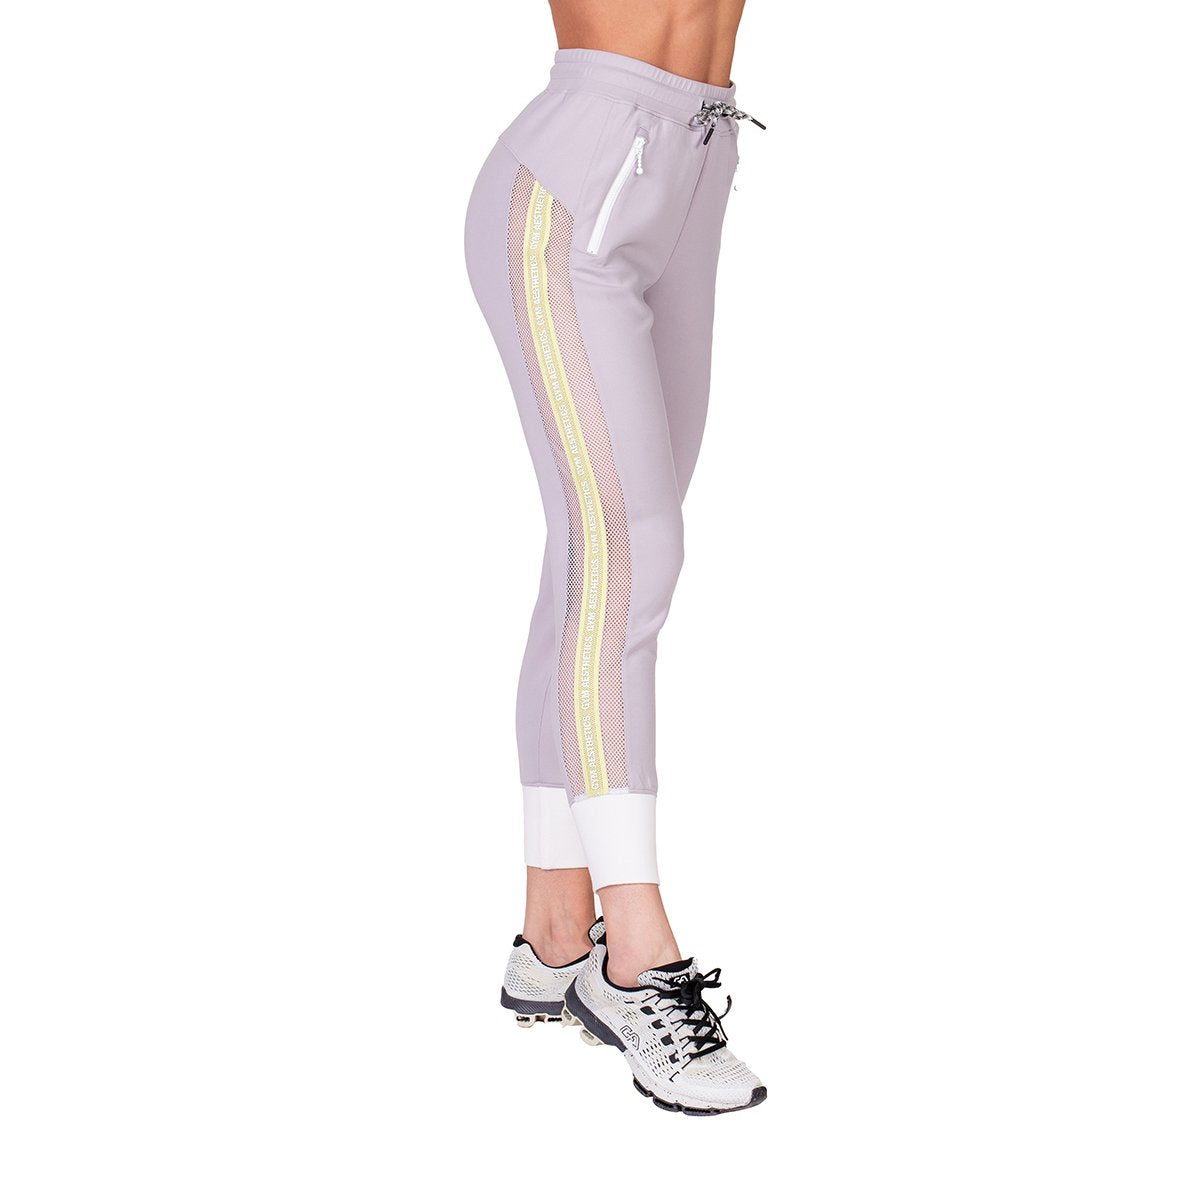 Training Jogger pants for Women